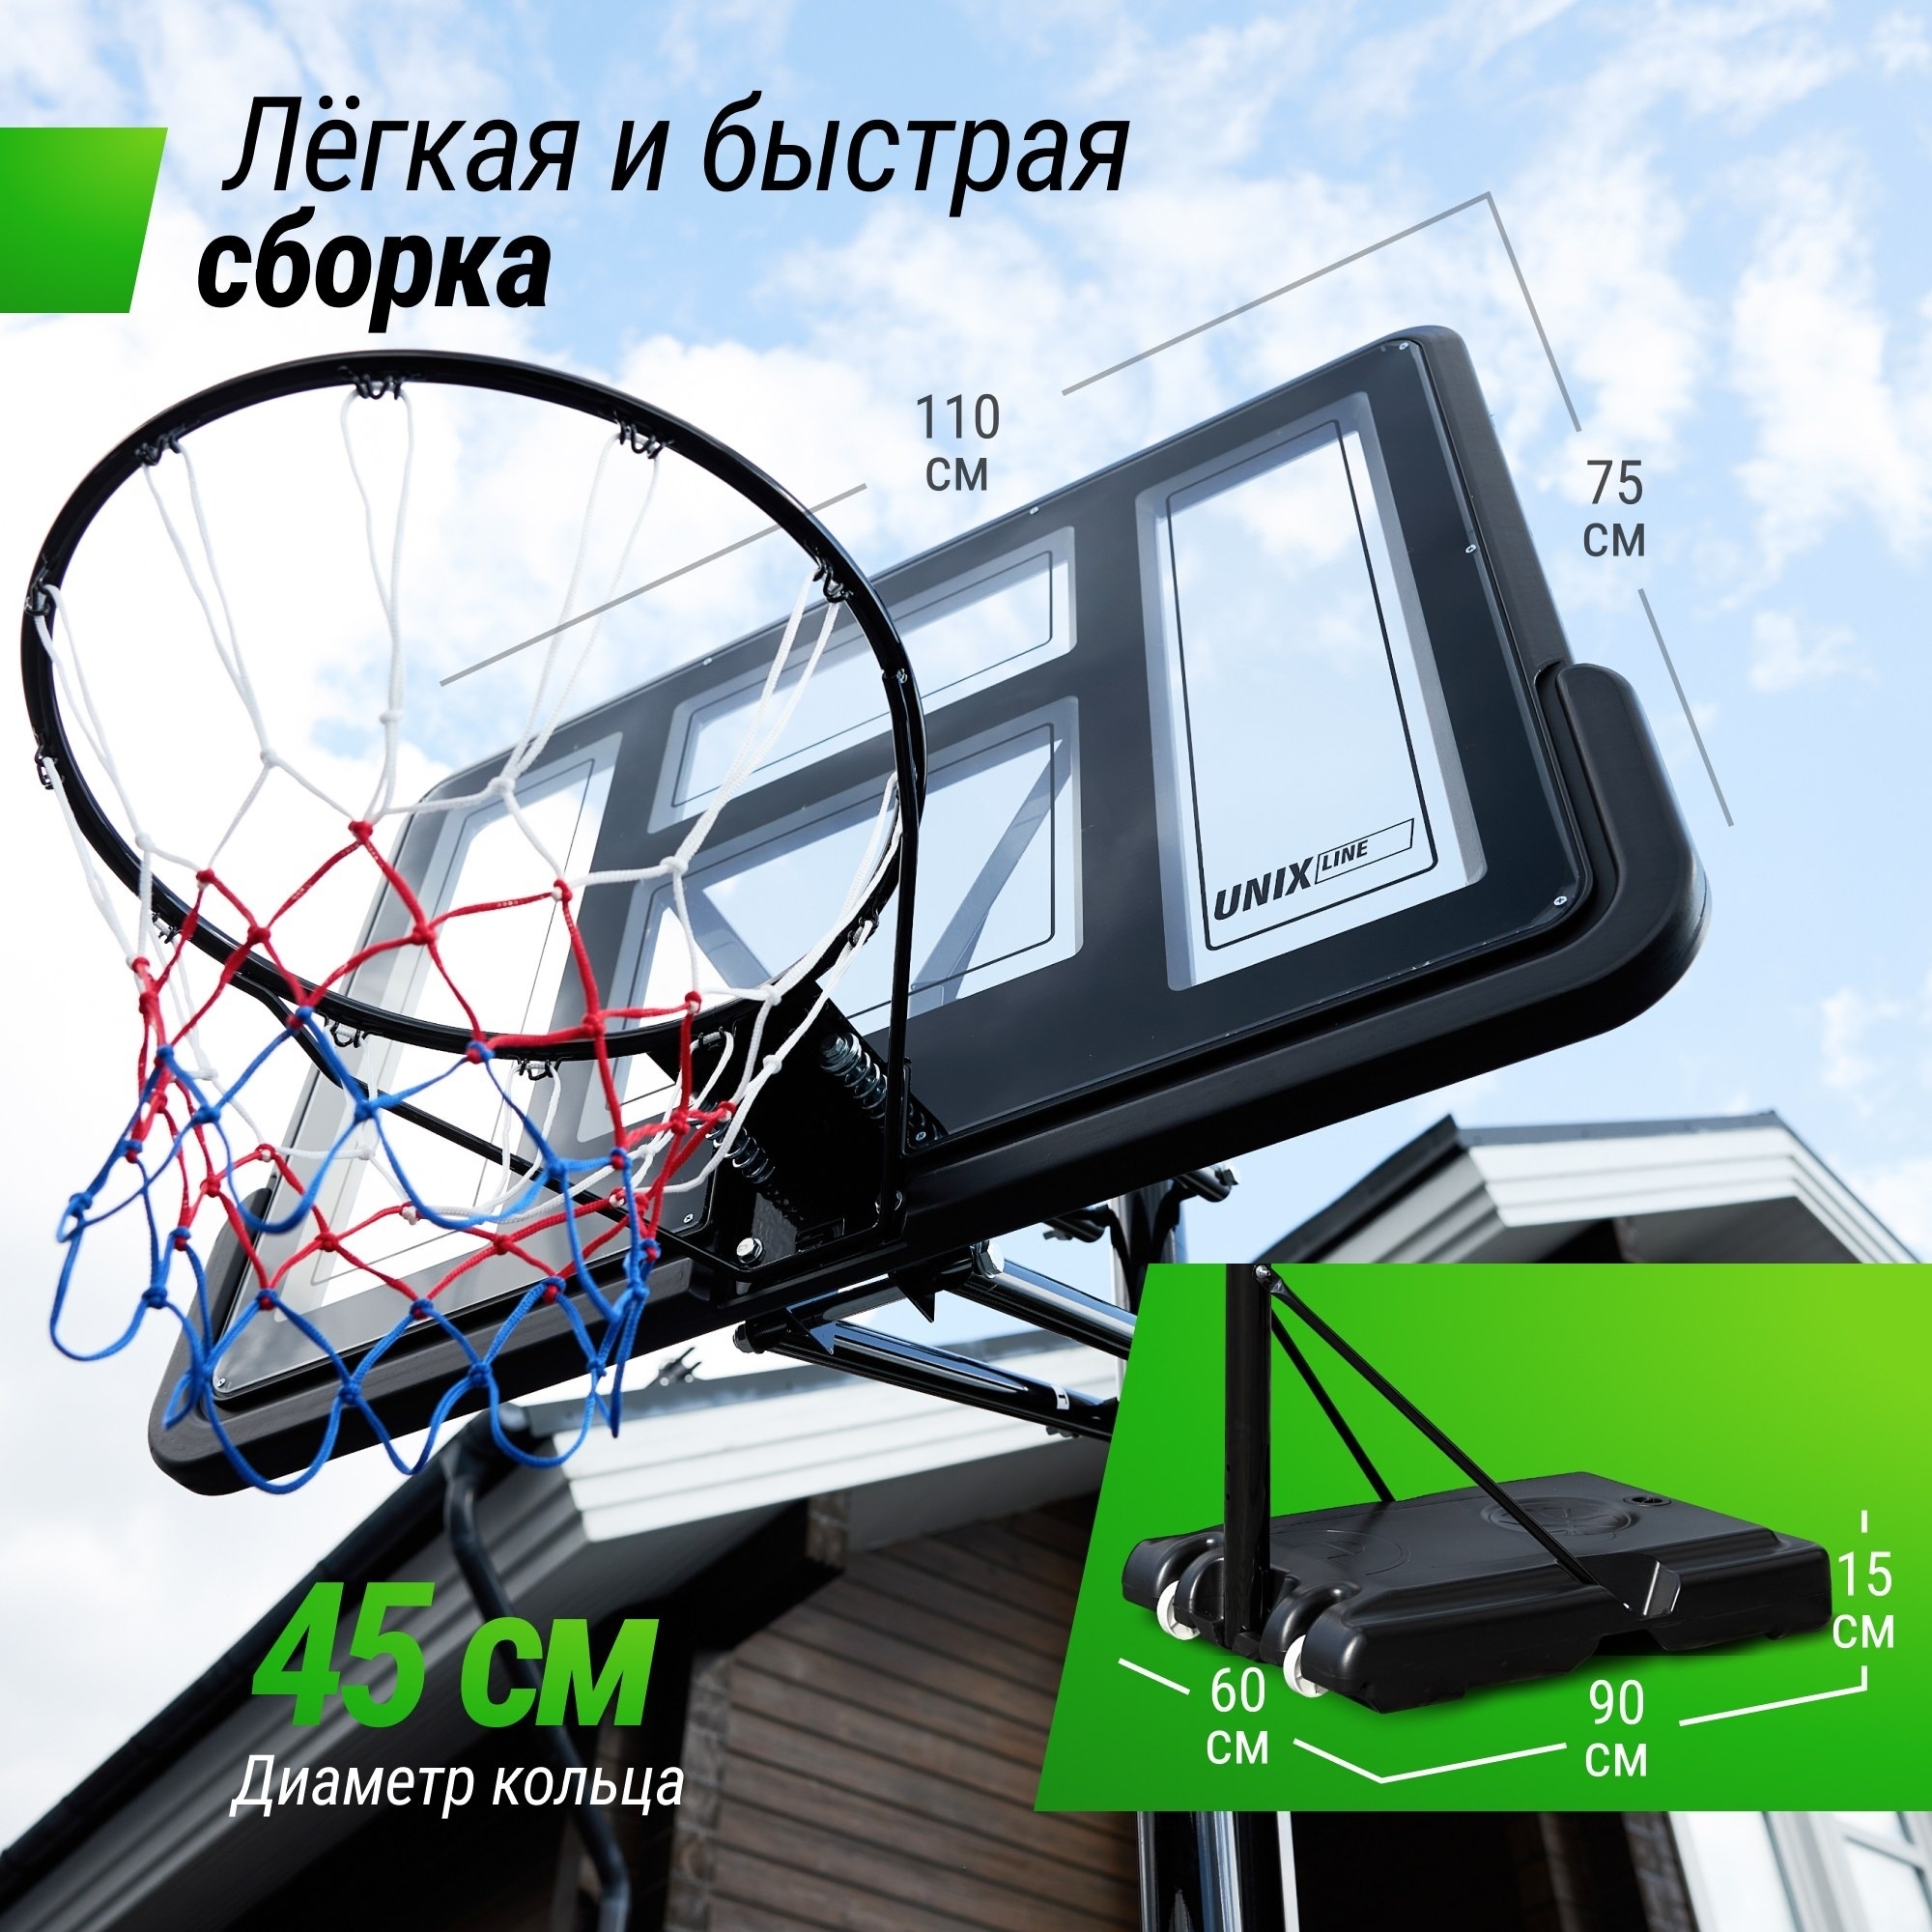 Баскетбольная стойка Unix Line B-Stand-PVC 44"x30" R45 H230-305см BSTS305_44PVCBK 2000_2000